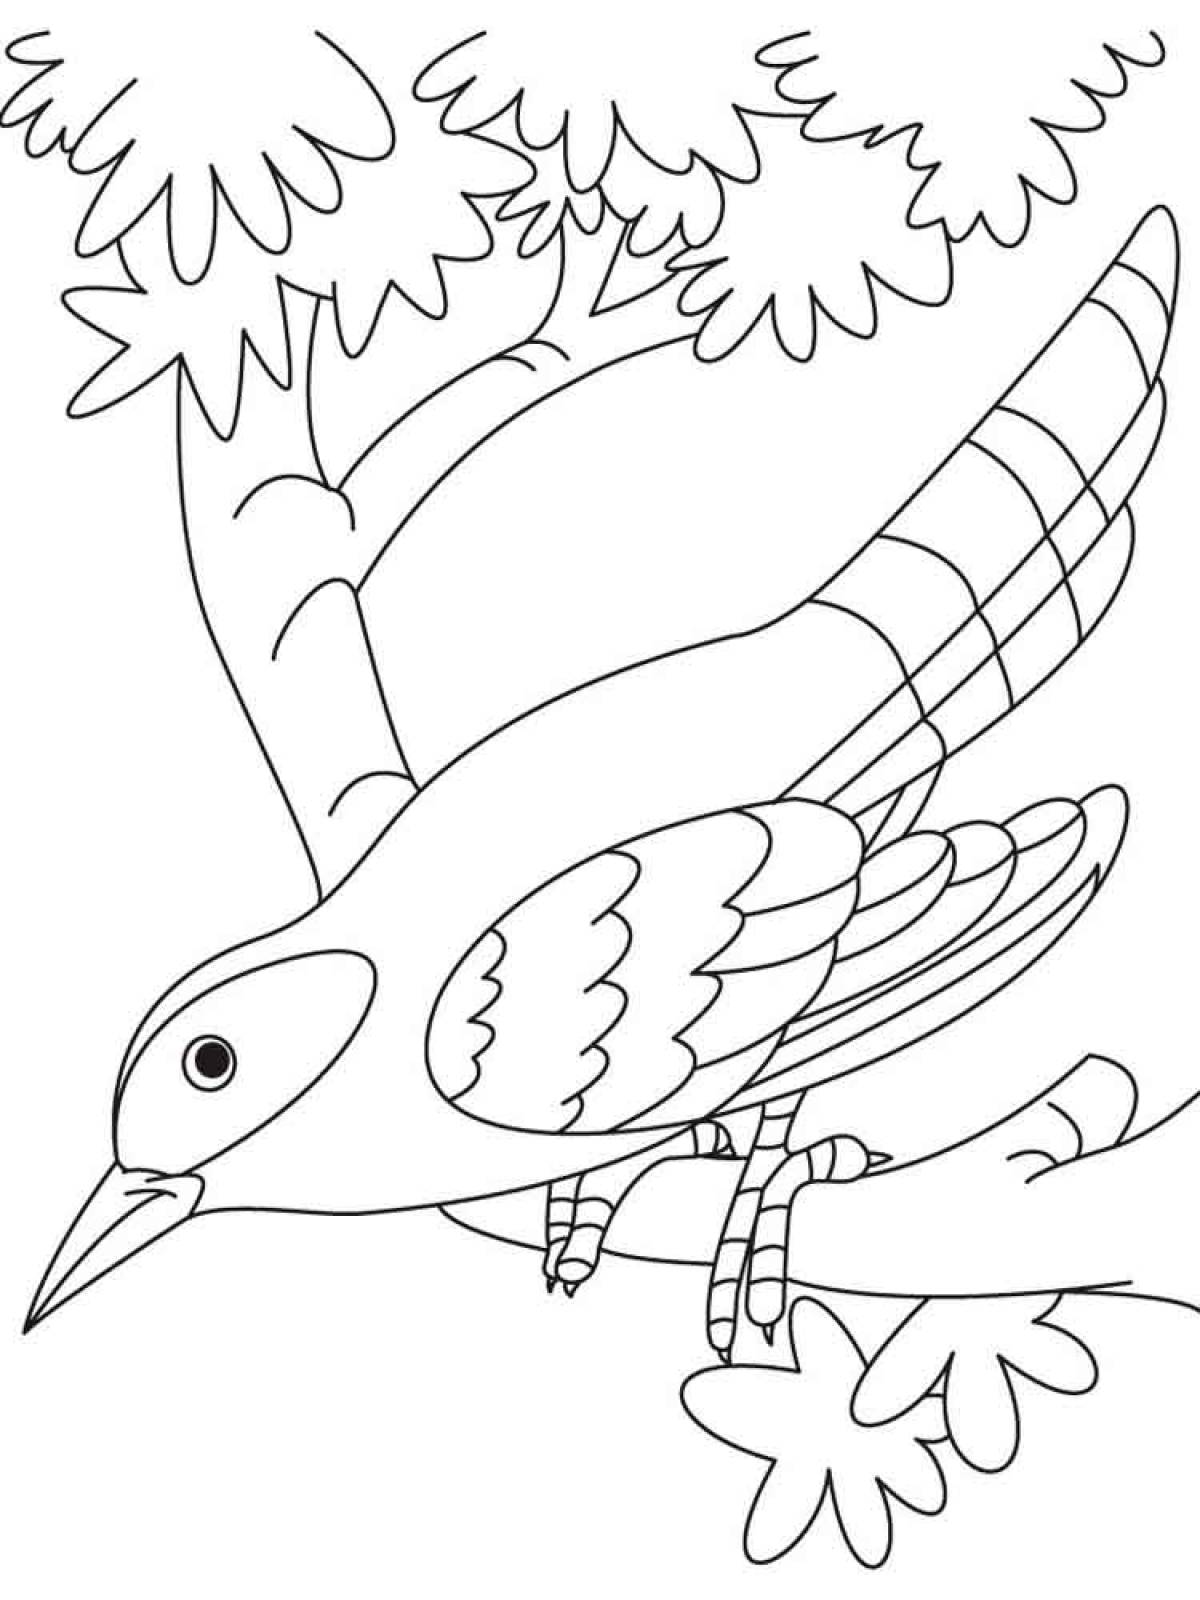 Перелетные птицы 4 5 лет. Птицы. Раскраска. Кукушка раскраска для детей. Птицы раскраска для детей. Птичка раскраска для детей.